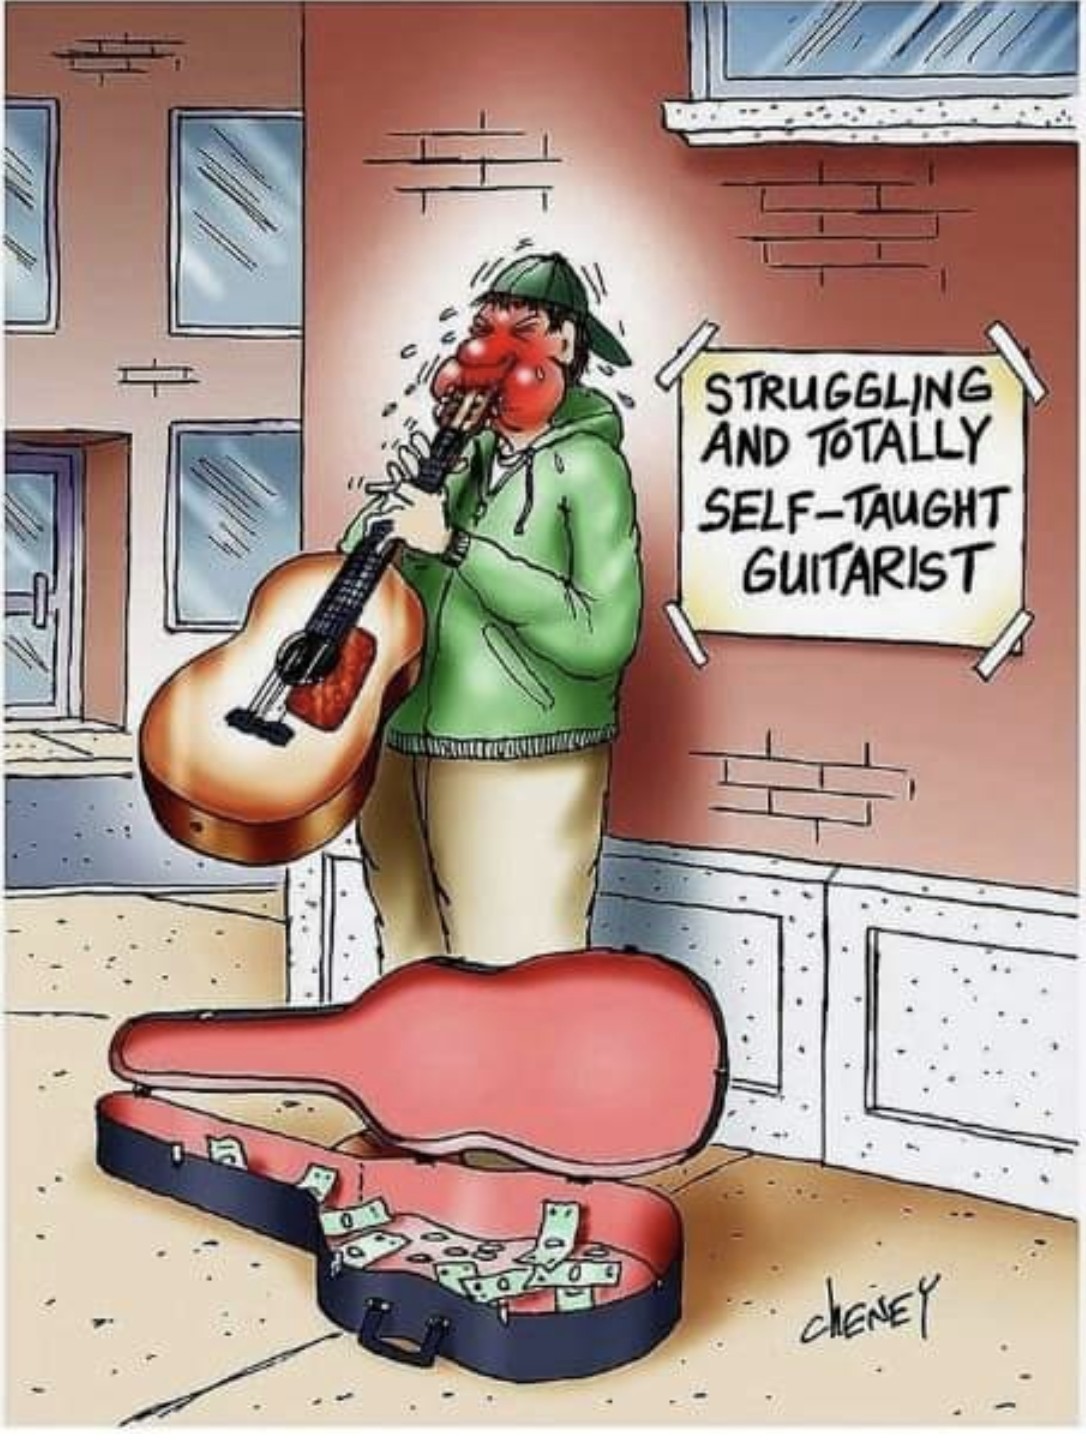 funny guitar player jokes